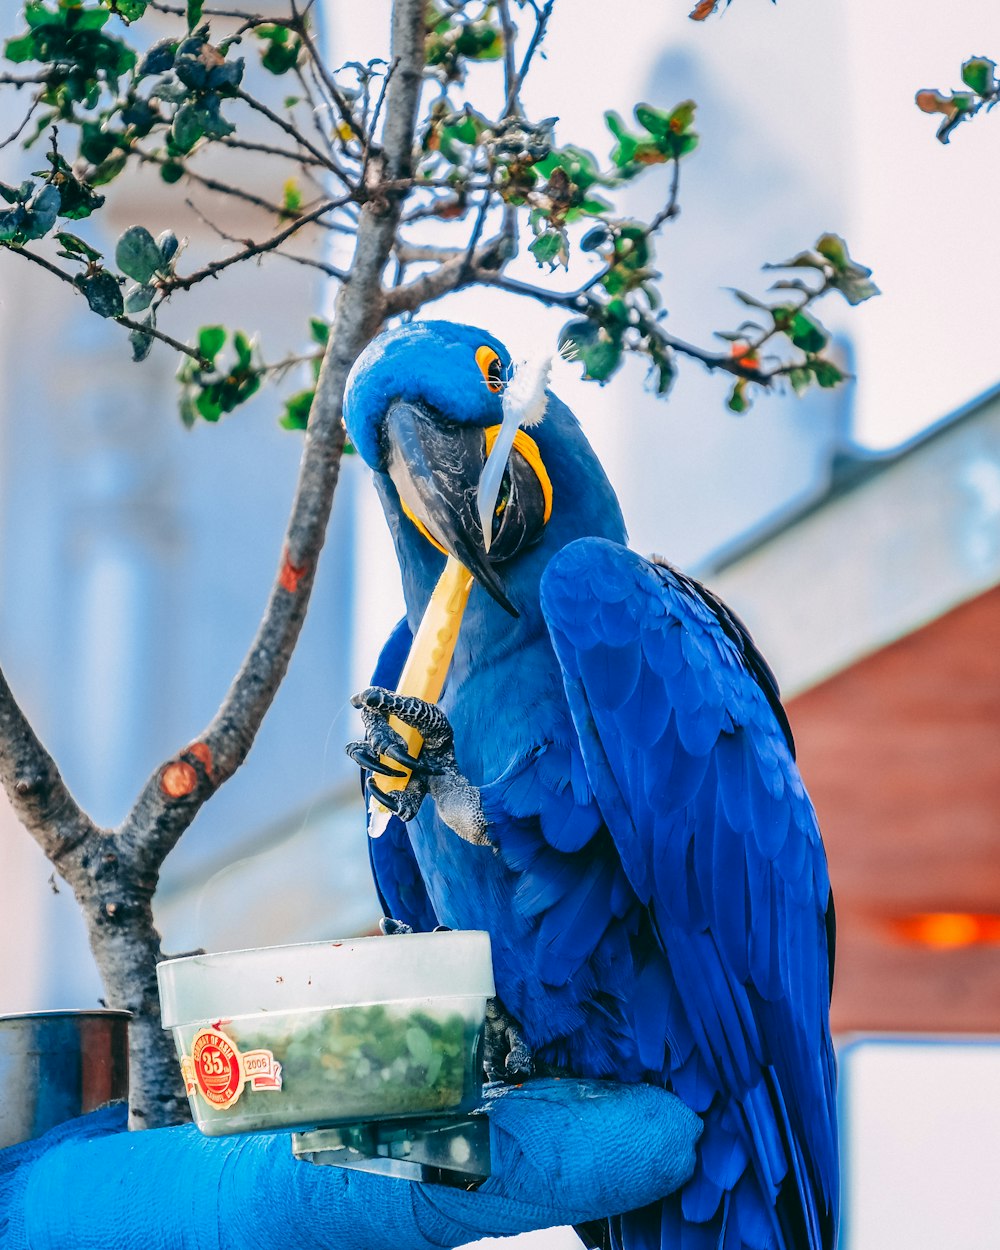 blue macaw holding toothbrush during daytime